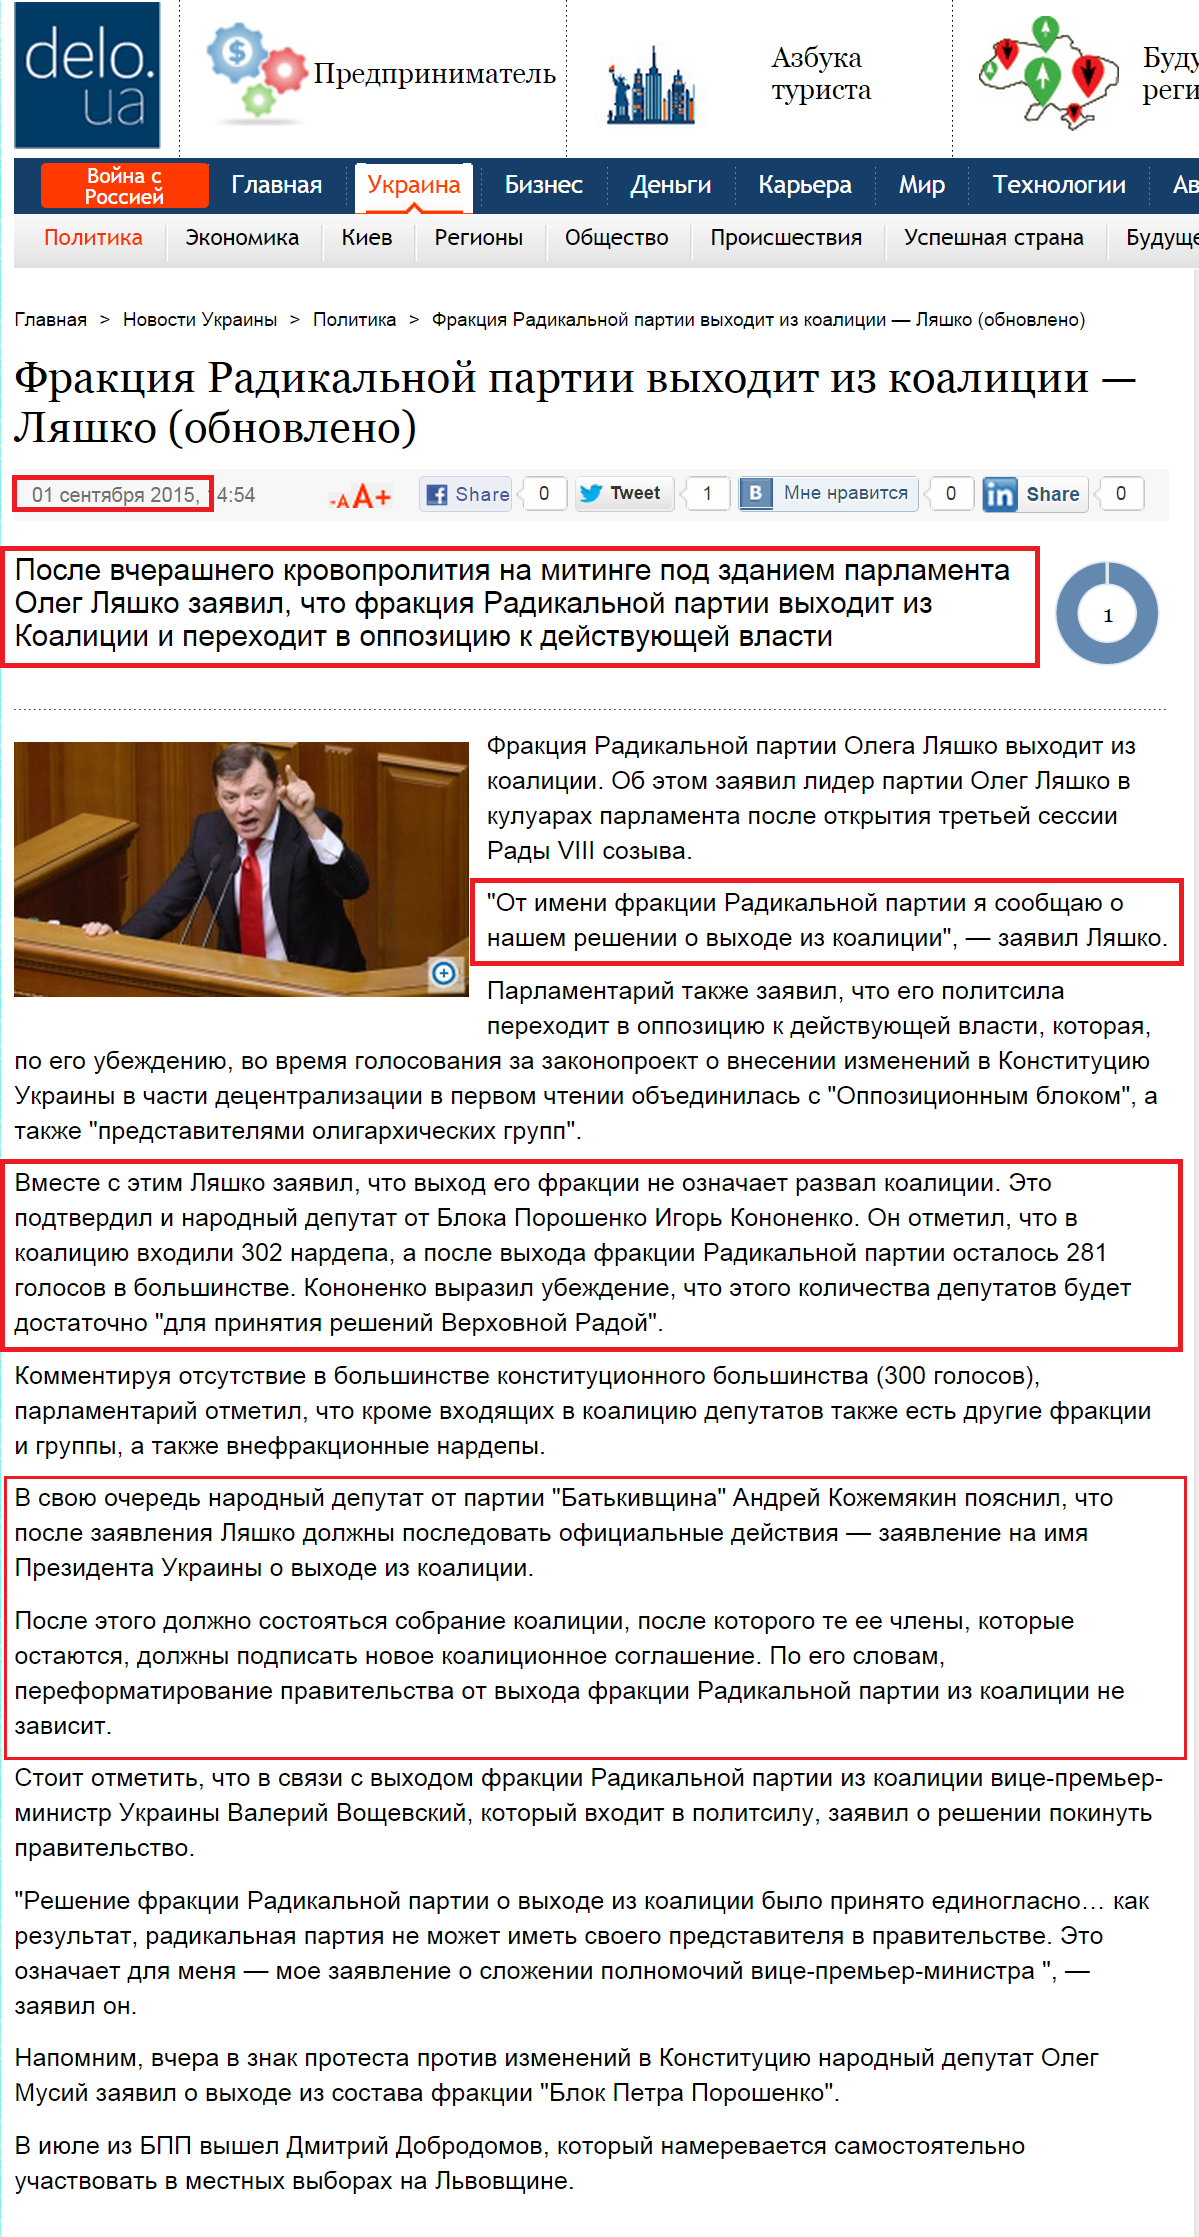 http://delo.ua/ukraine/frakcija-radikalnoj-partii-vyhodit-iz-koalicii-ljashko-302984/?supdated_new=1441114454